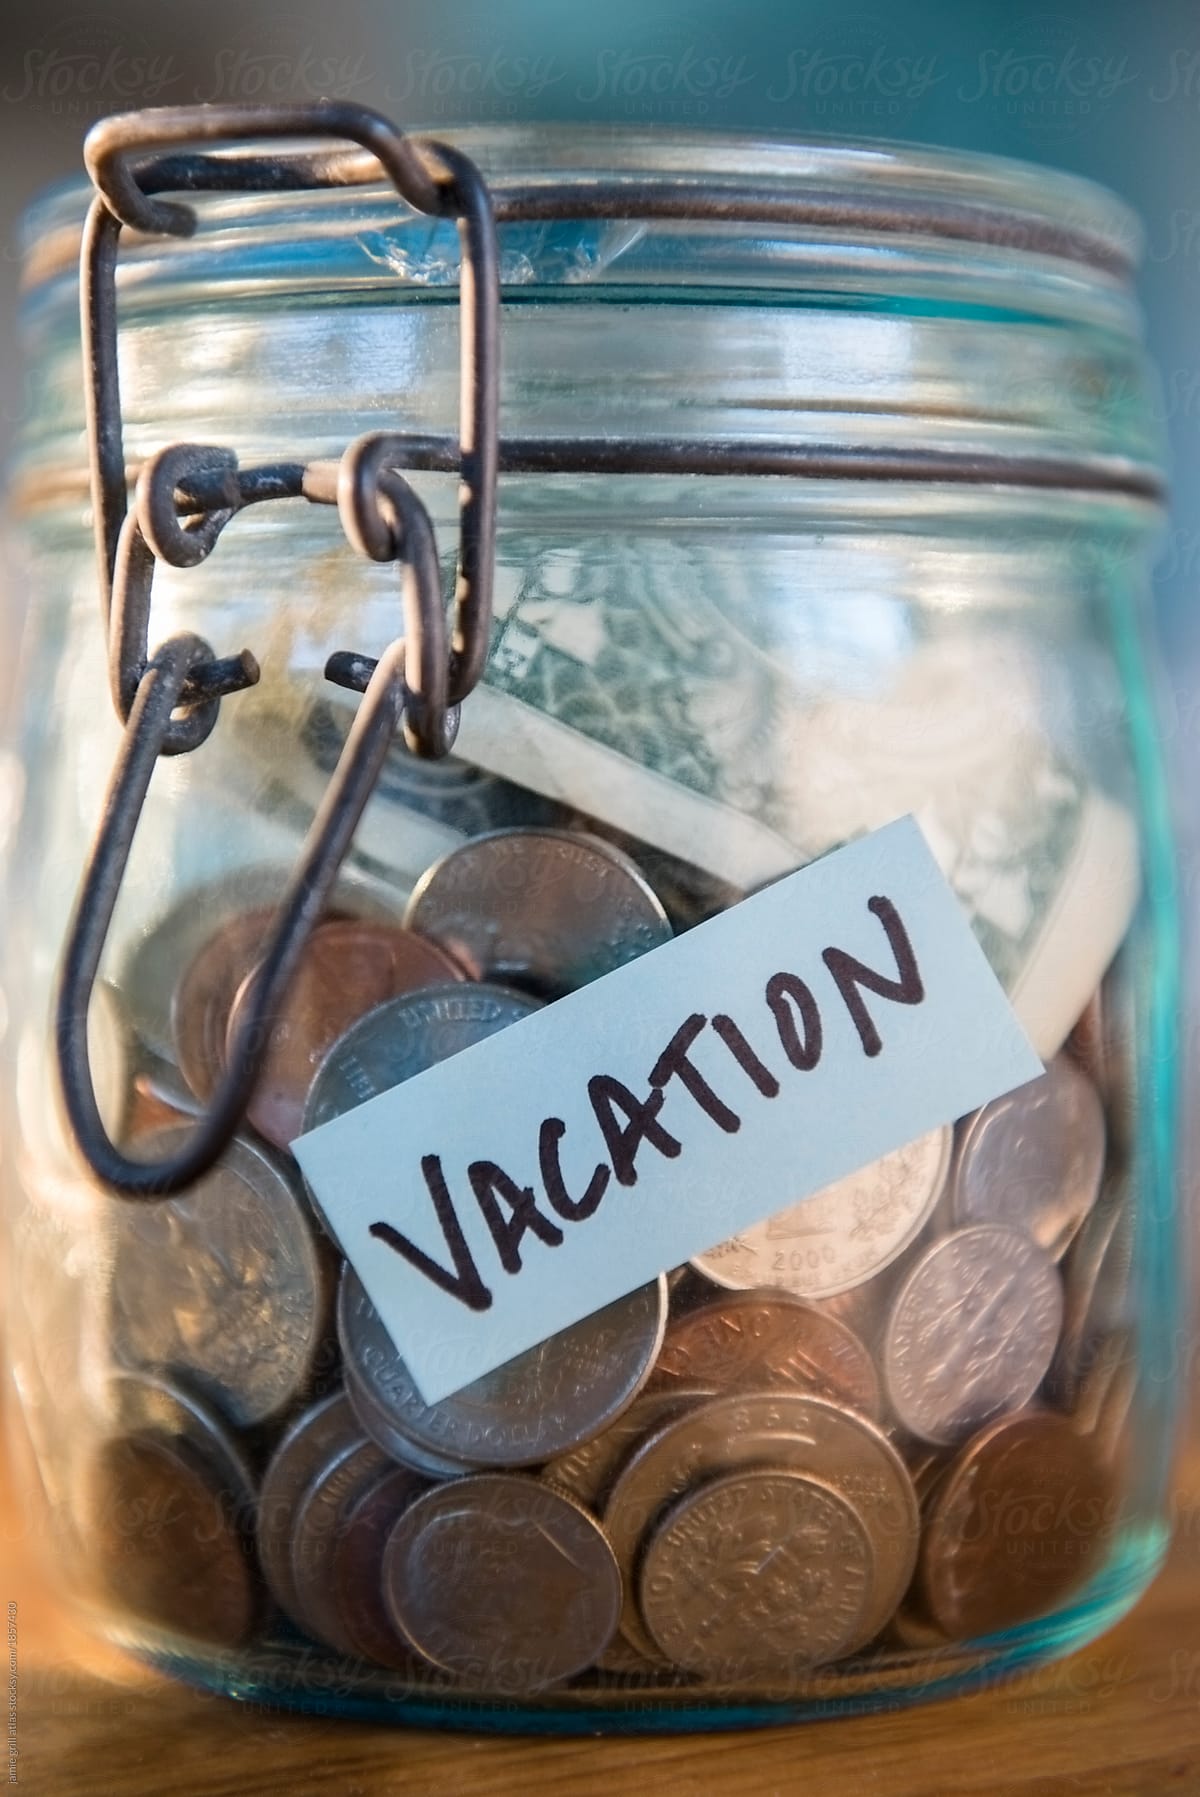 Vacation fund